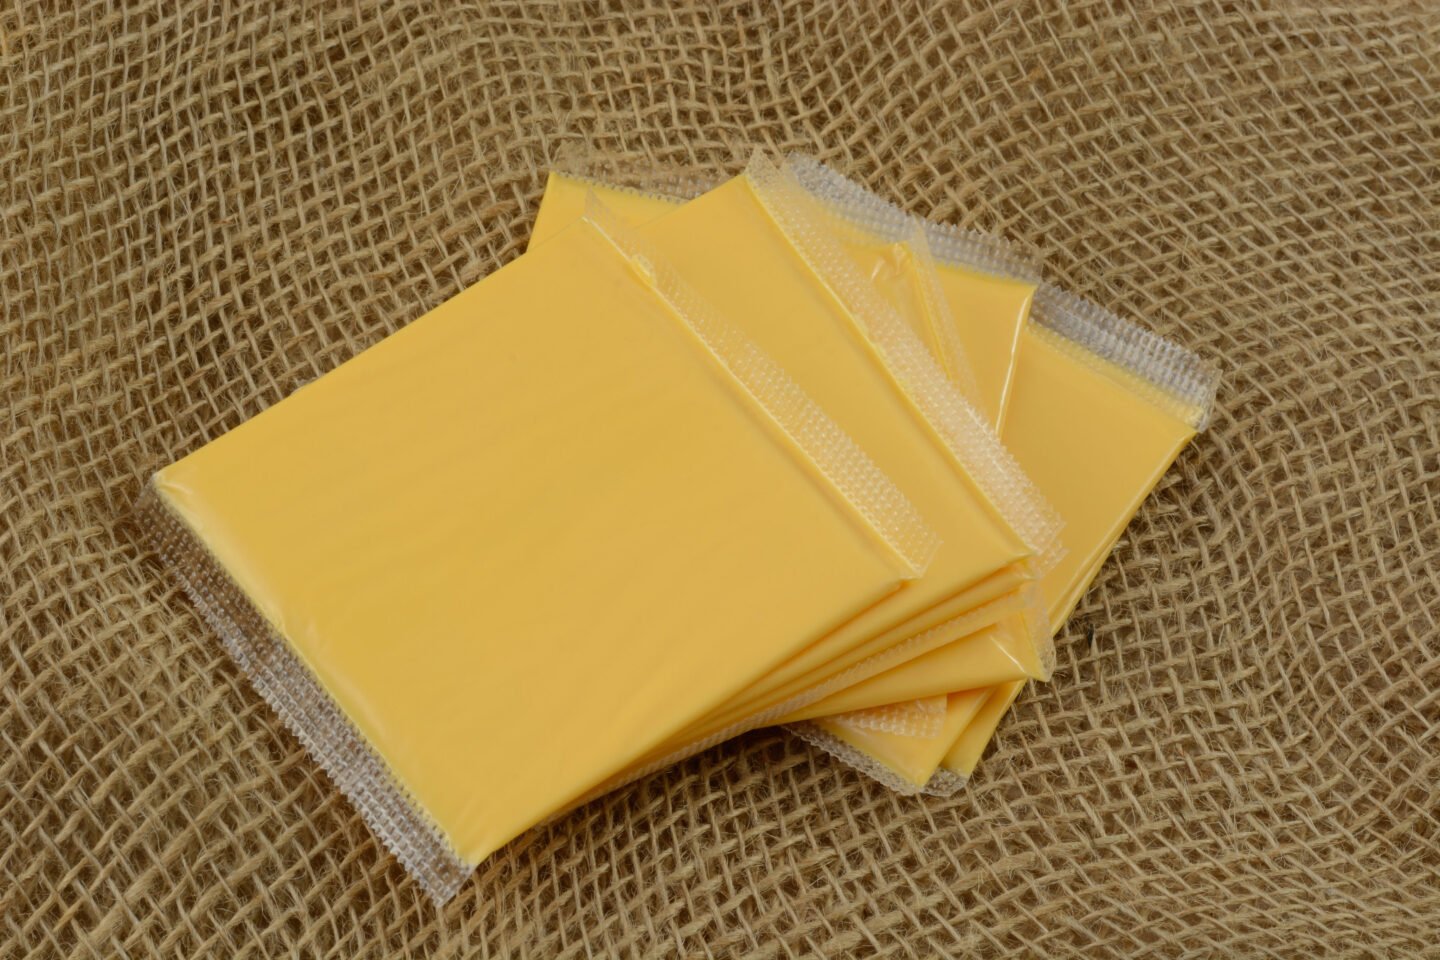 american cheese slices in plastic packaging